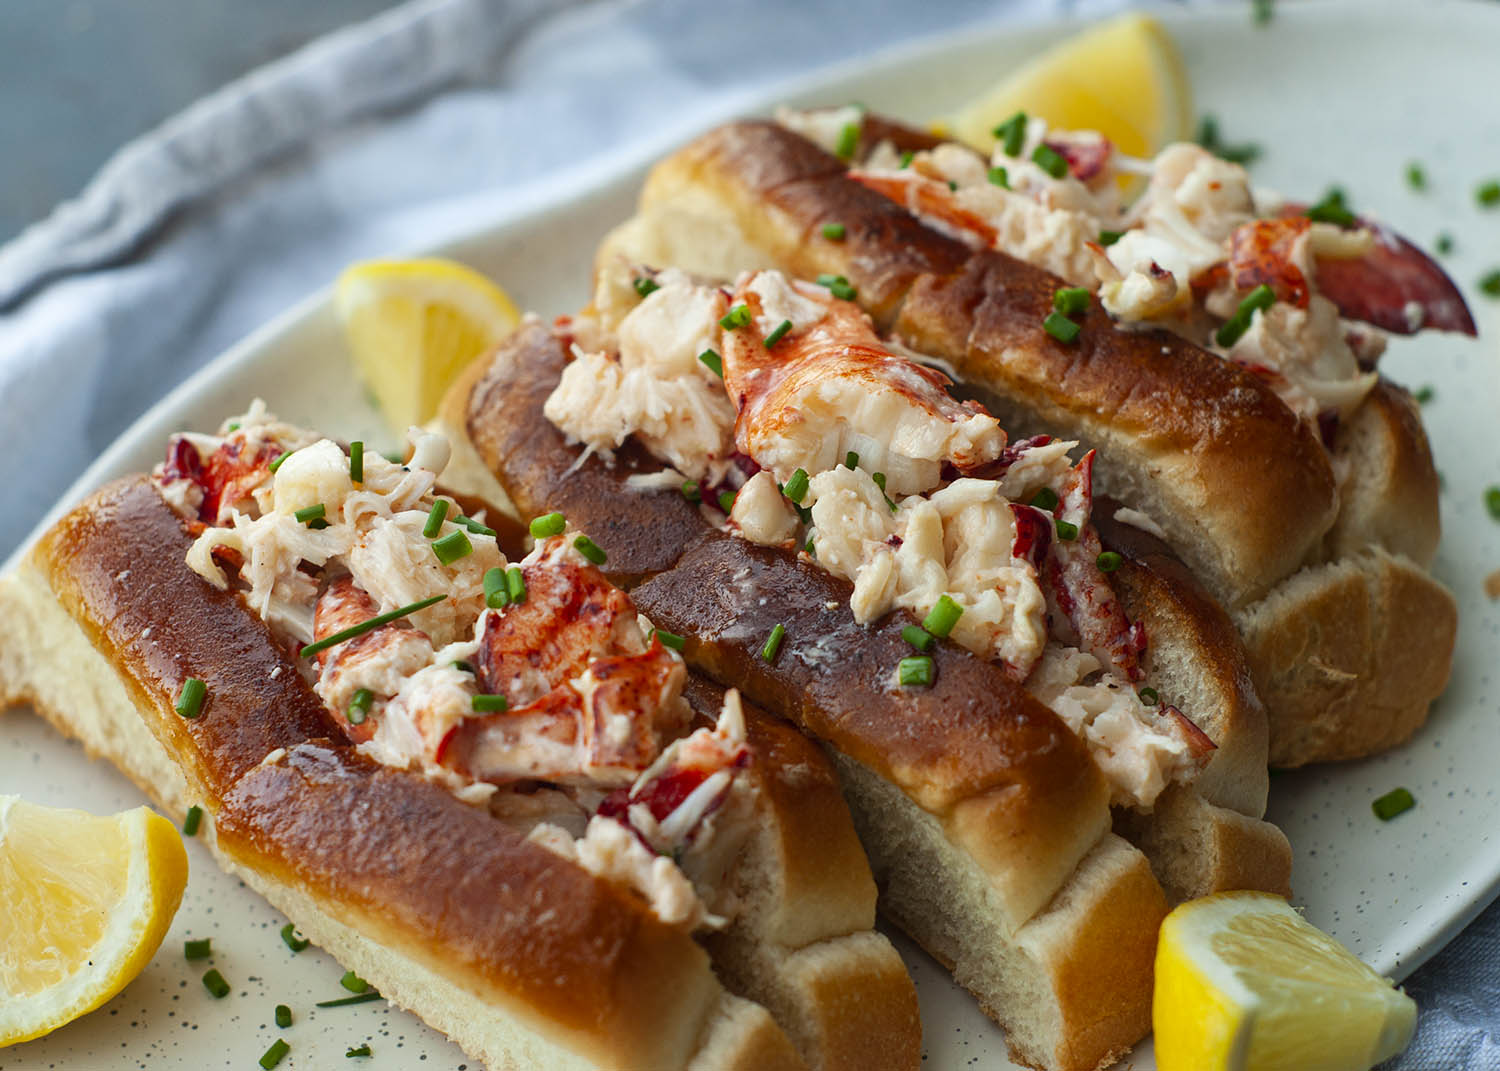 Guédille au homard (lobster roll)